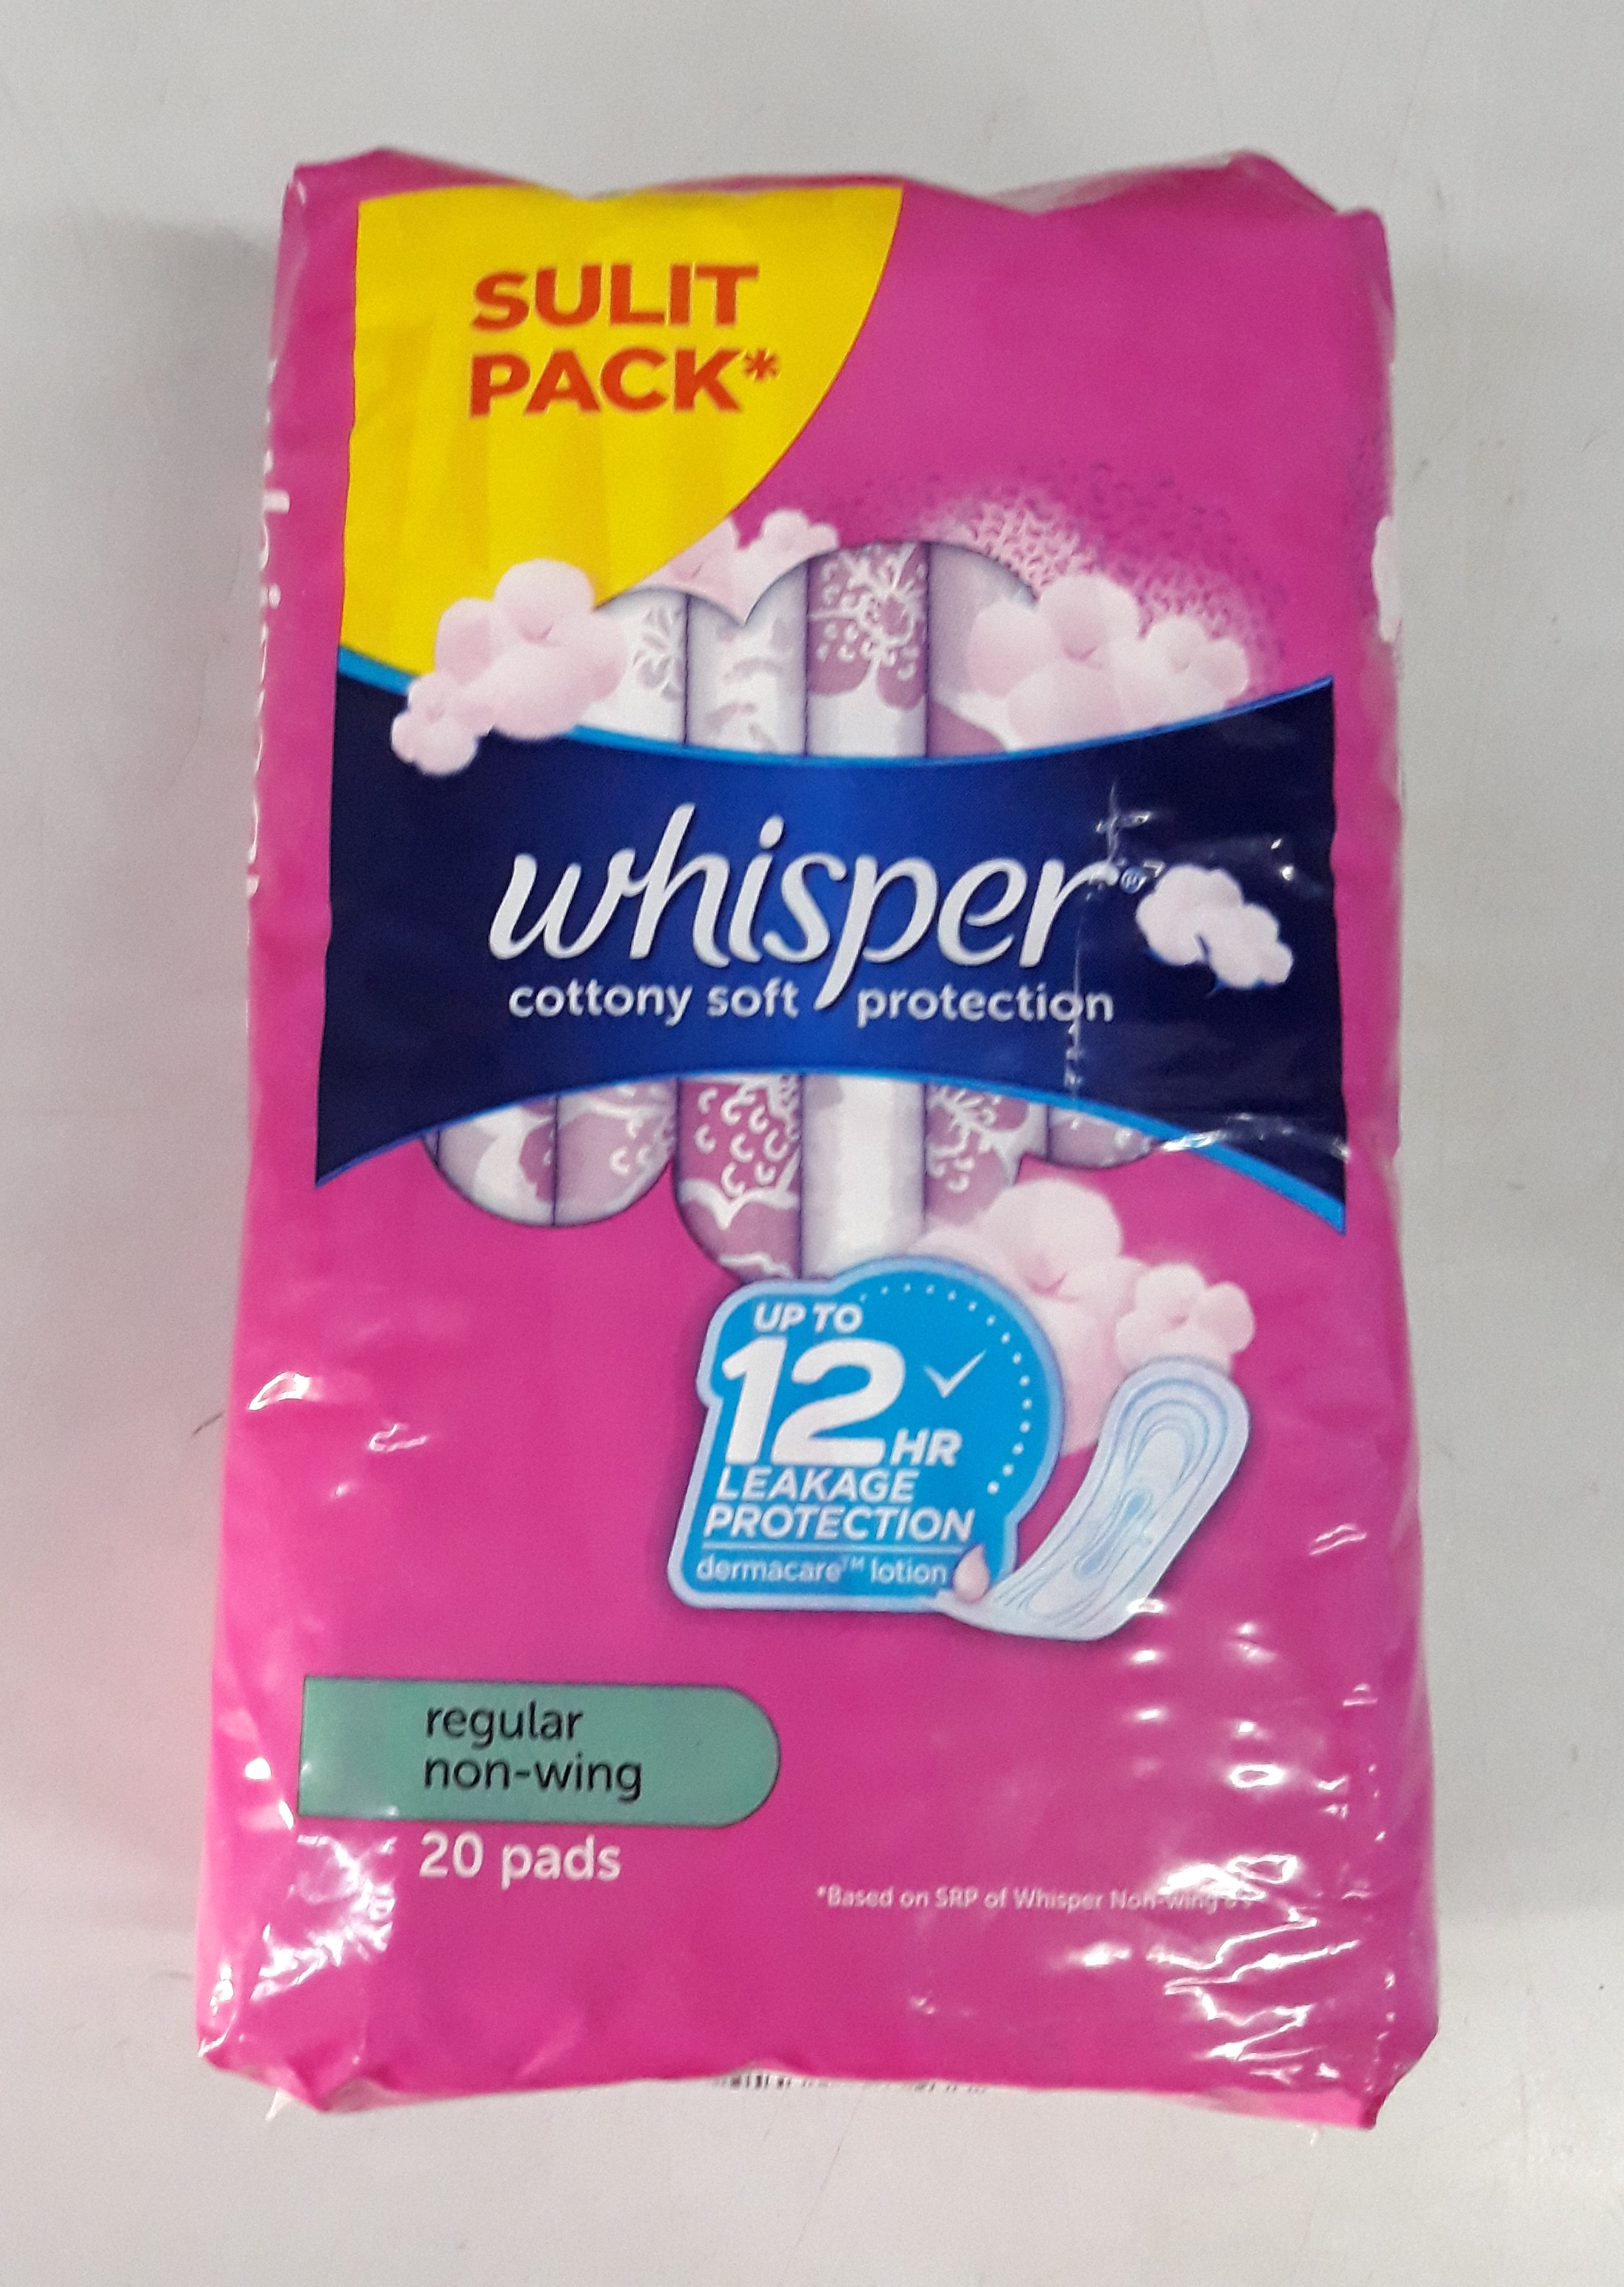 Whisper Sulit Pack - Regular Non-Wing (20 pads)pink